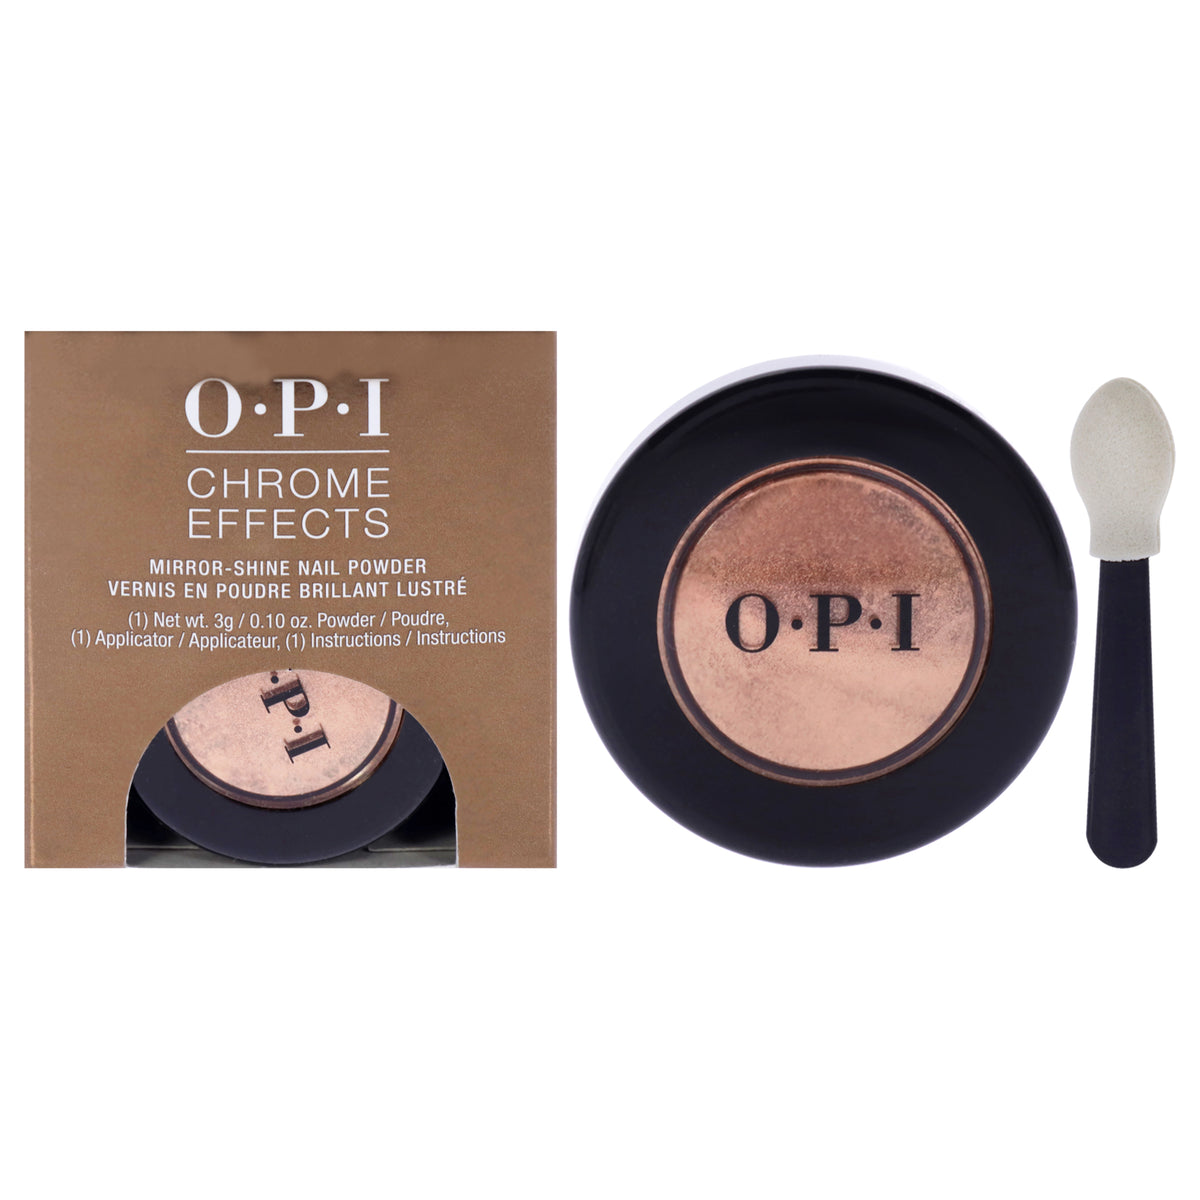 Chrome Effects Mirror Shine Nail Powder - Bronzed By The Sun by OPI for Women - 0.1 oz Nail Powder